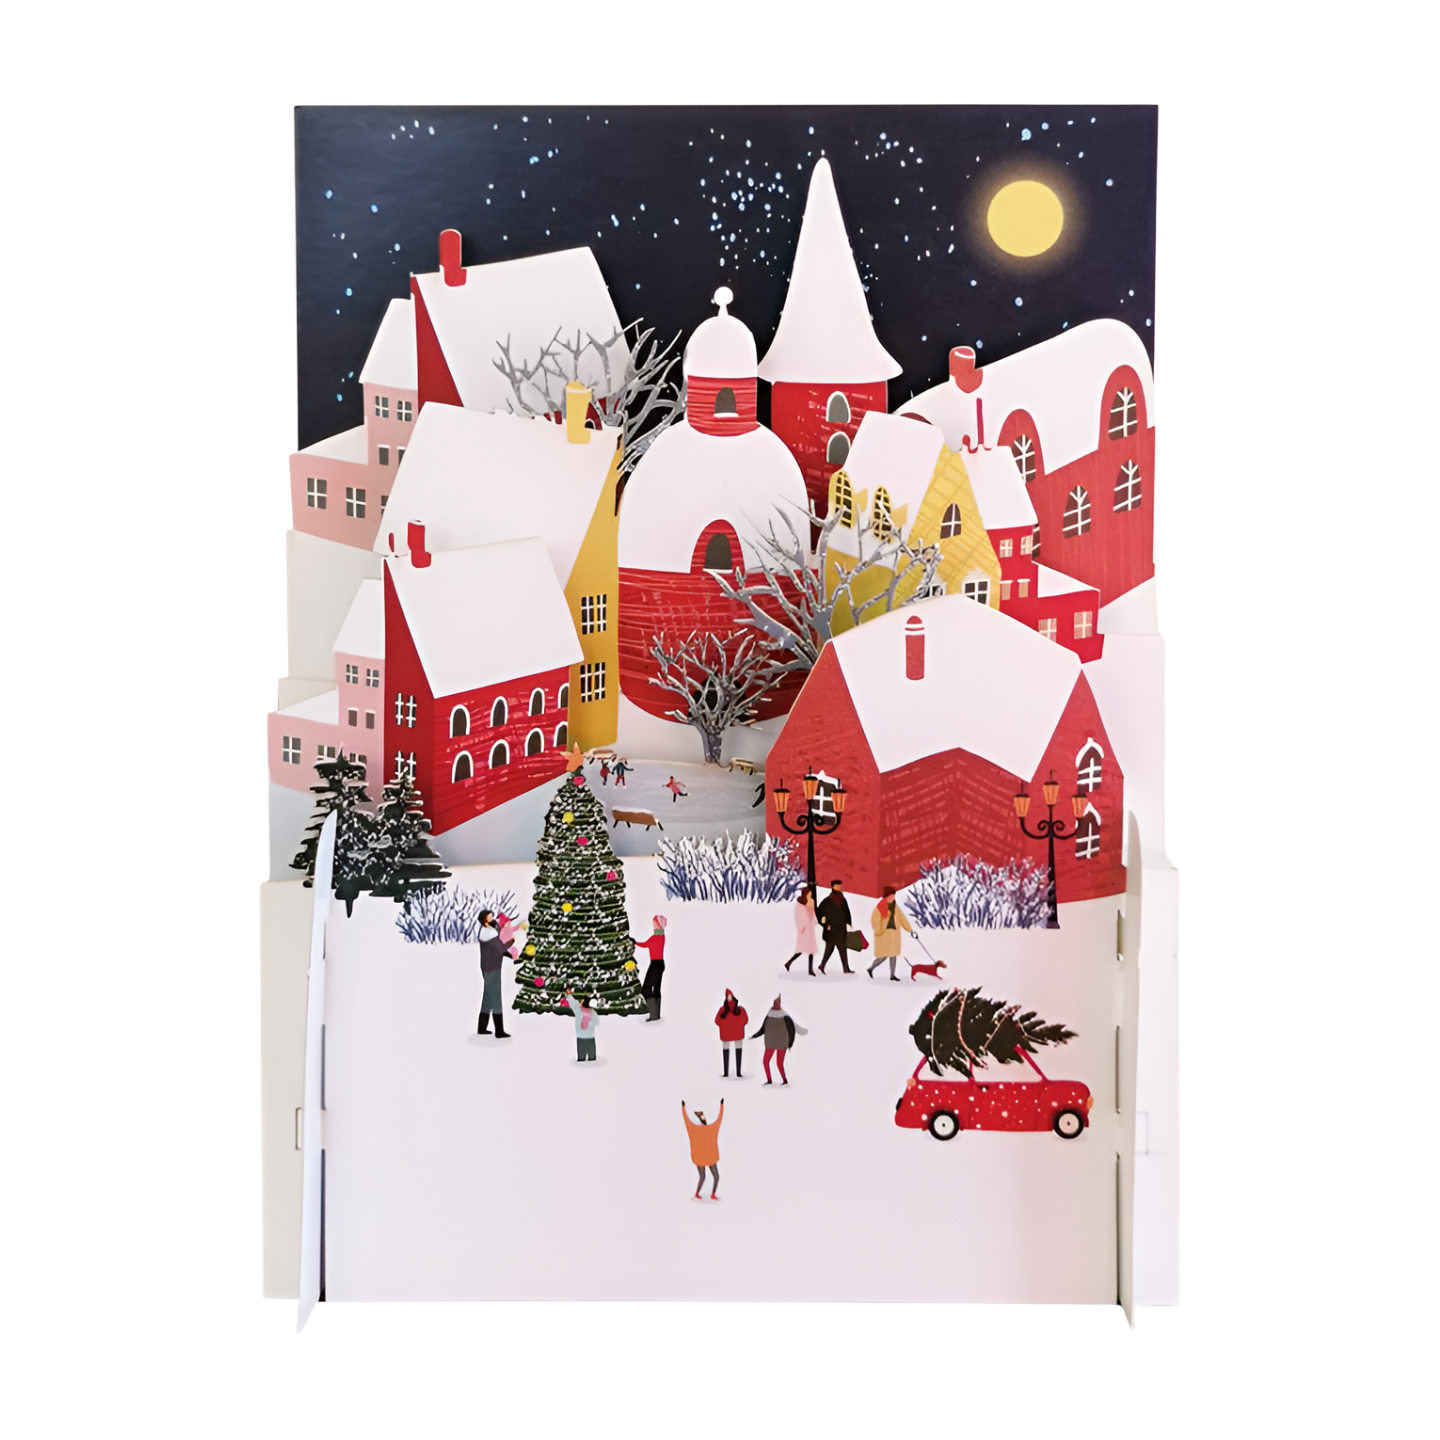 Festive Christmas Village 3D Pop Up Christmas Greeting Card